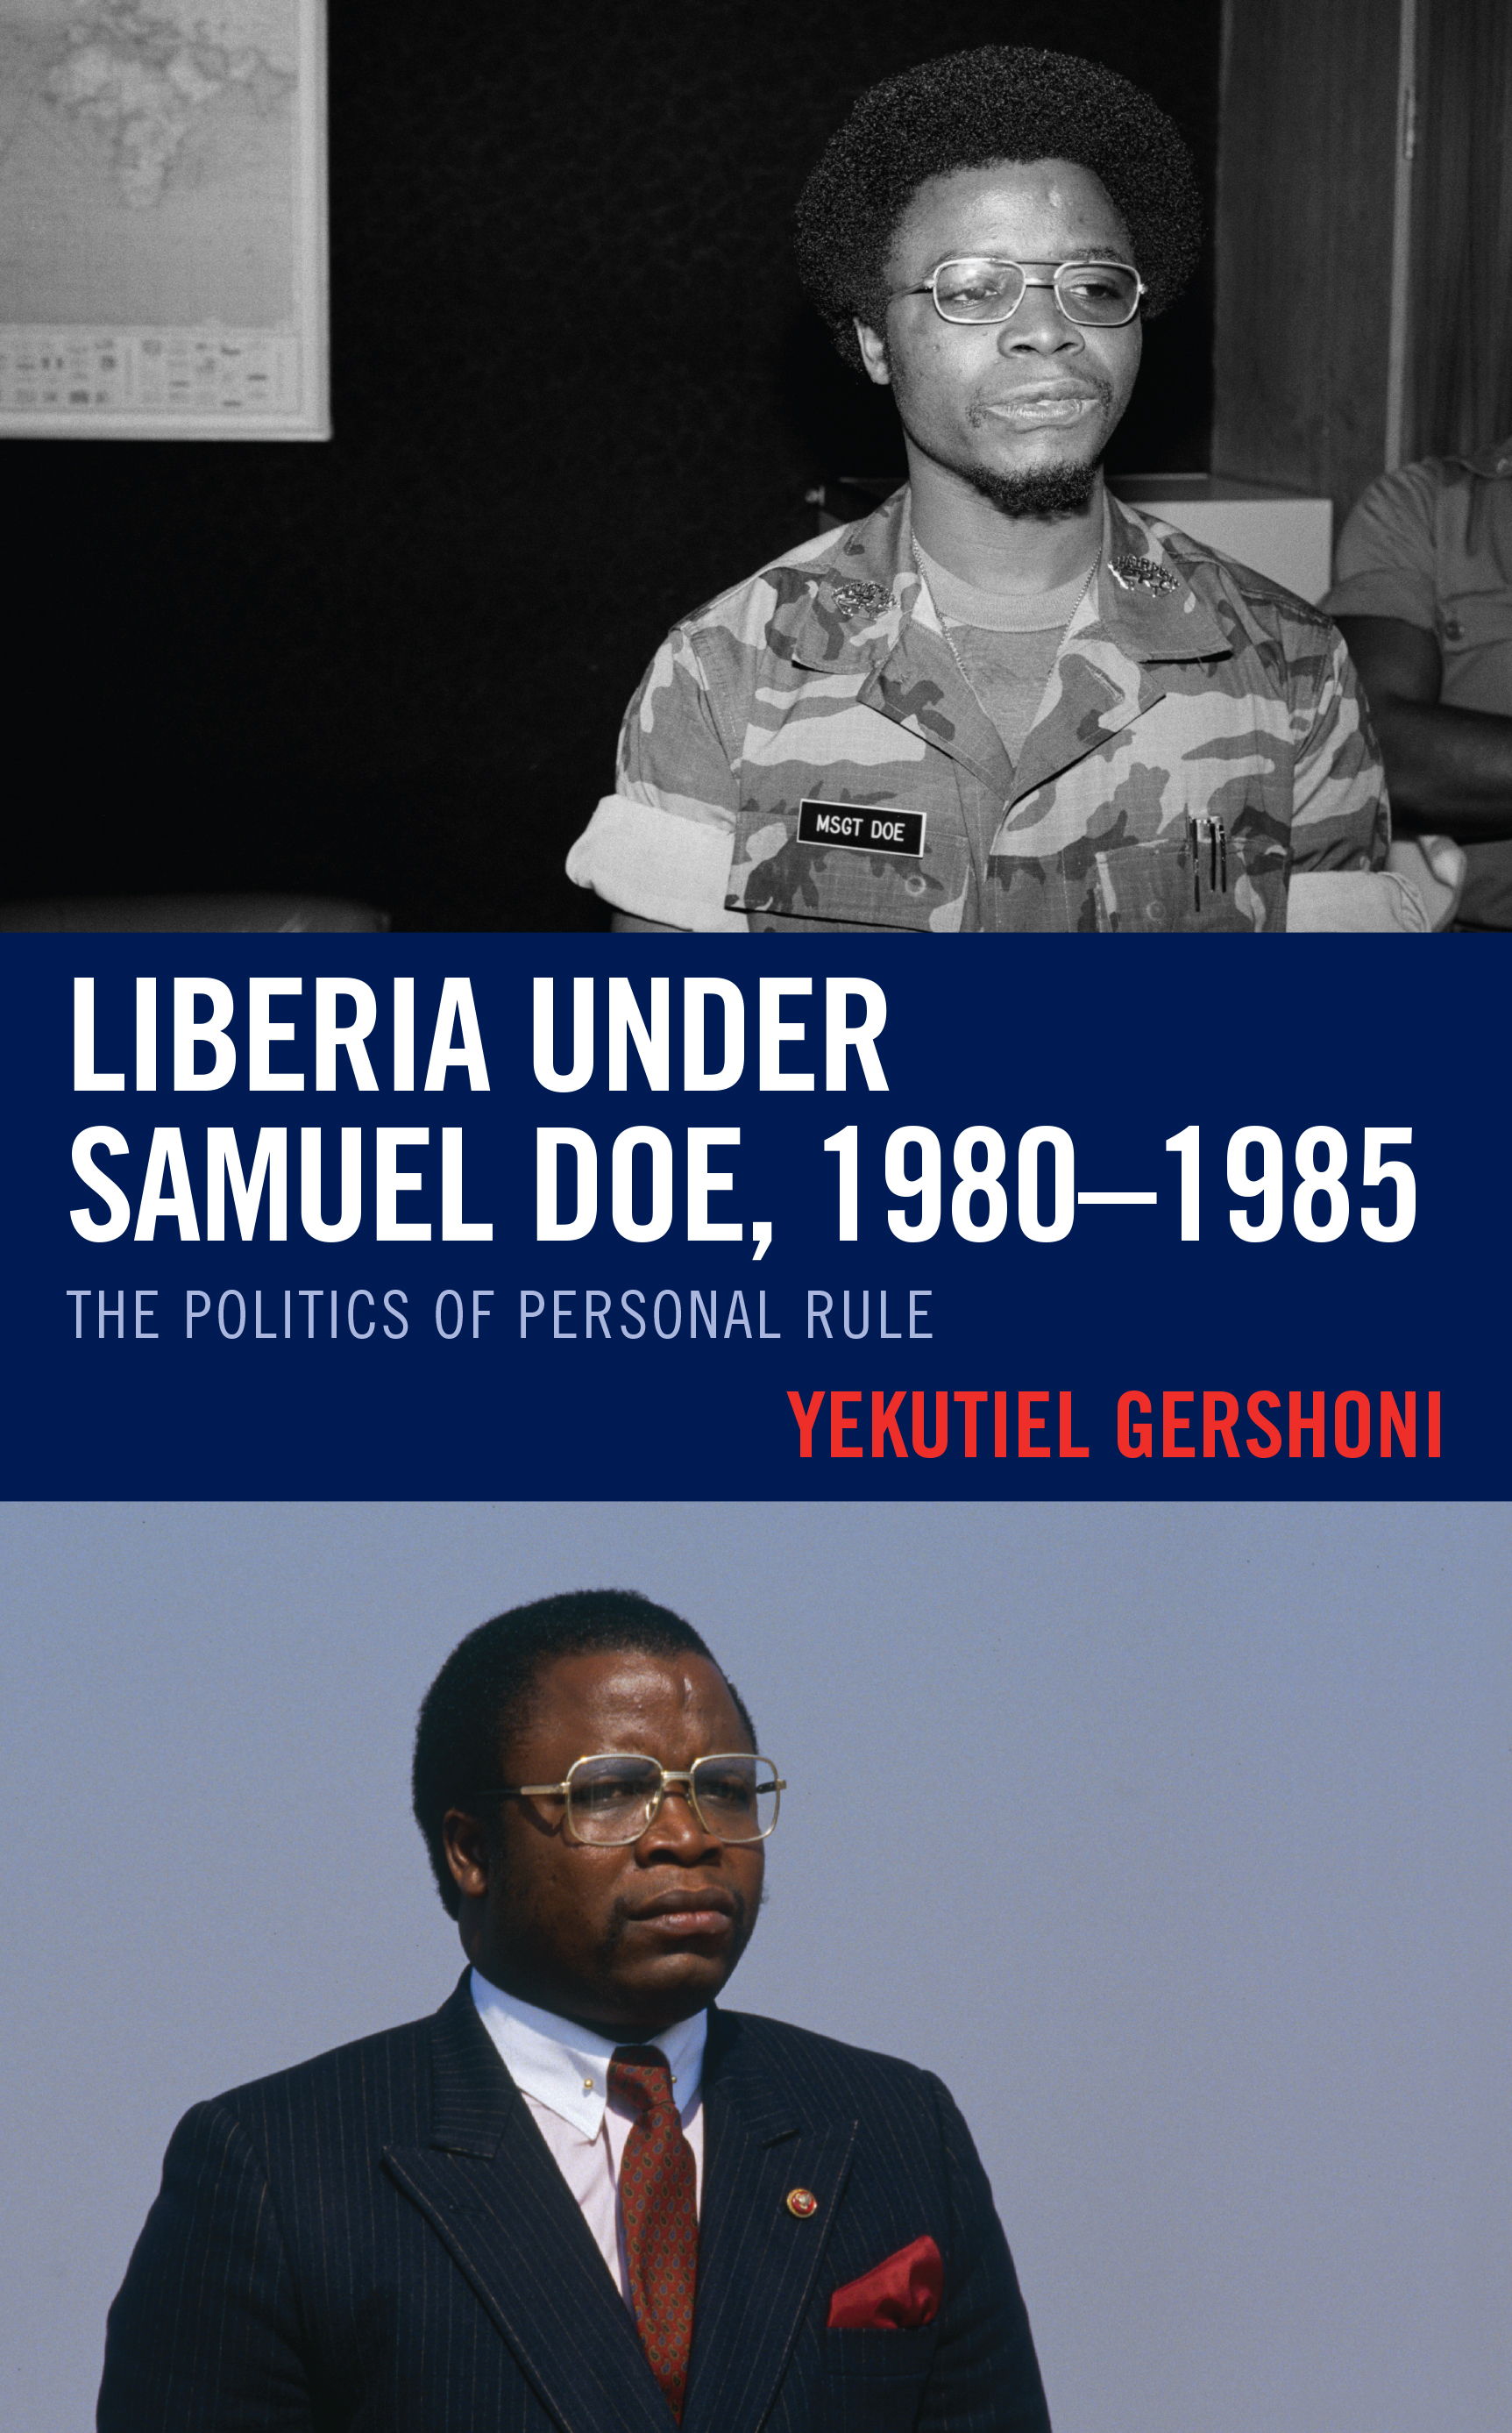 Liberia under Samuel Doe, 1980–1985: The Politics of Personal Rule